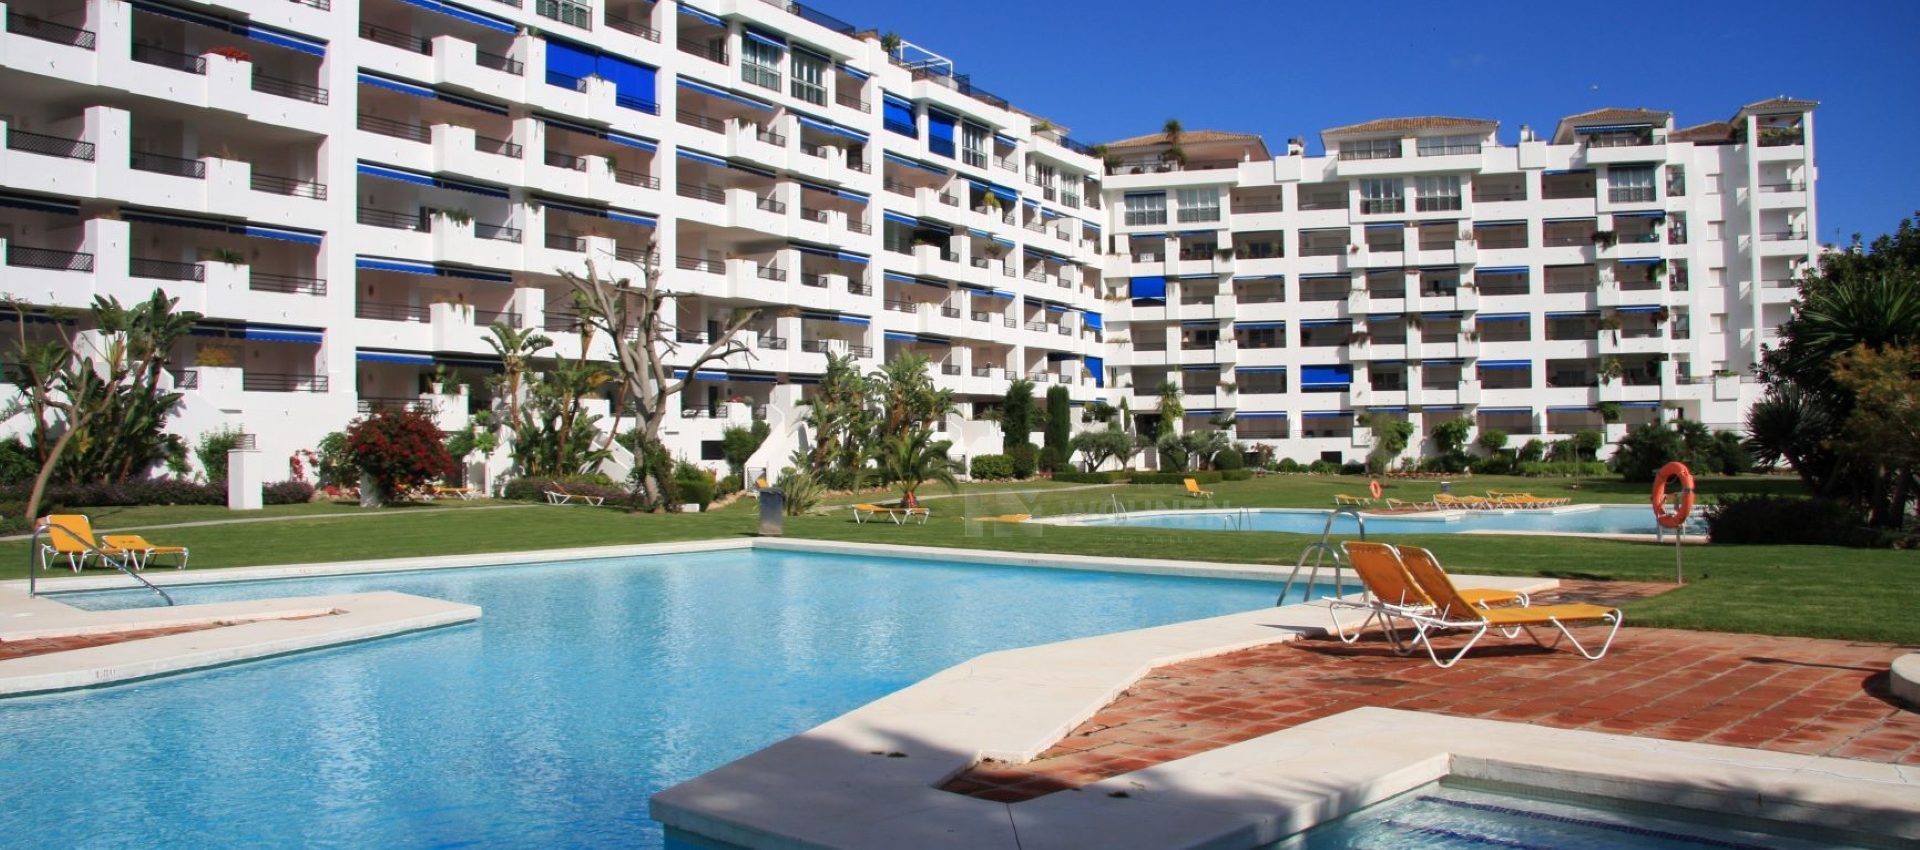 Luxury apartments in the heart of Puerto Banus, Marbella